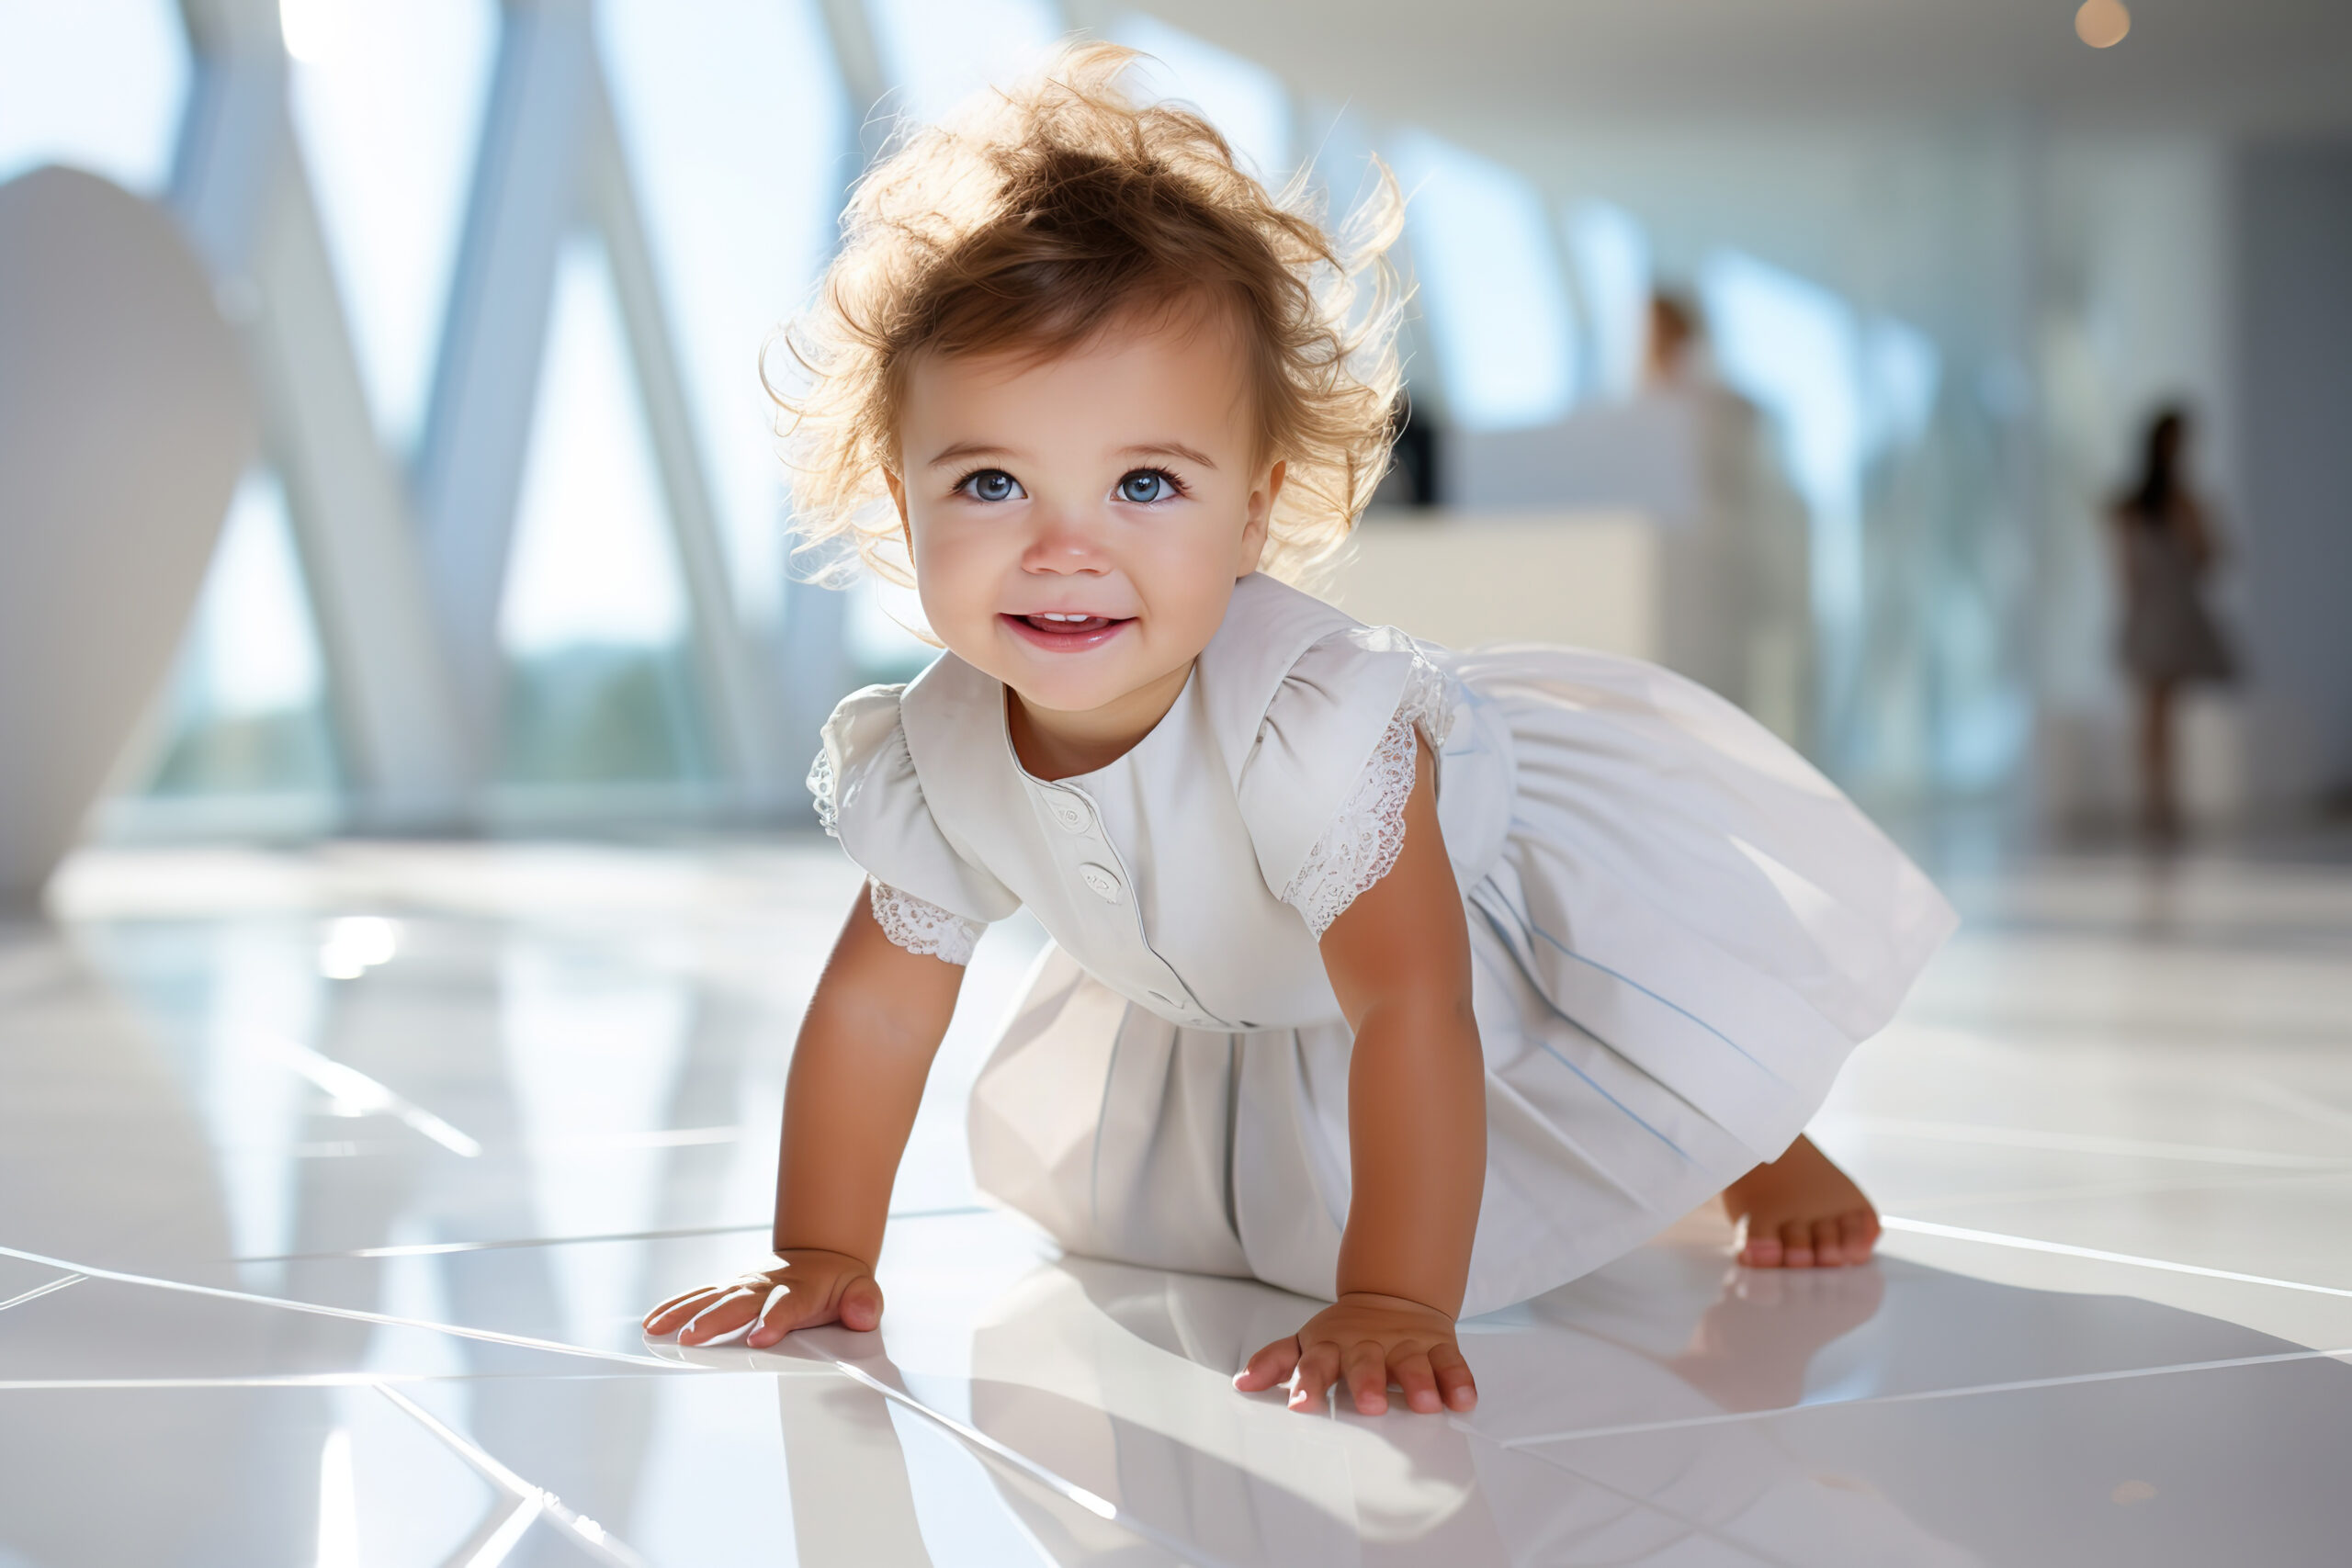 Toddler developmental milestones between 2 years and 30 months